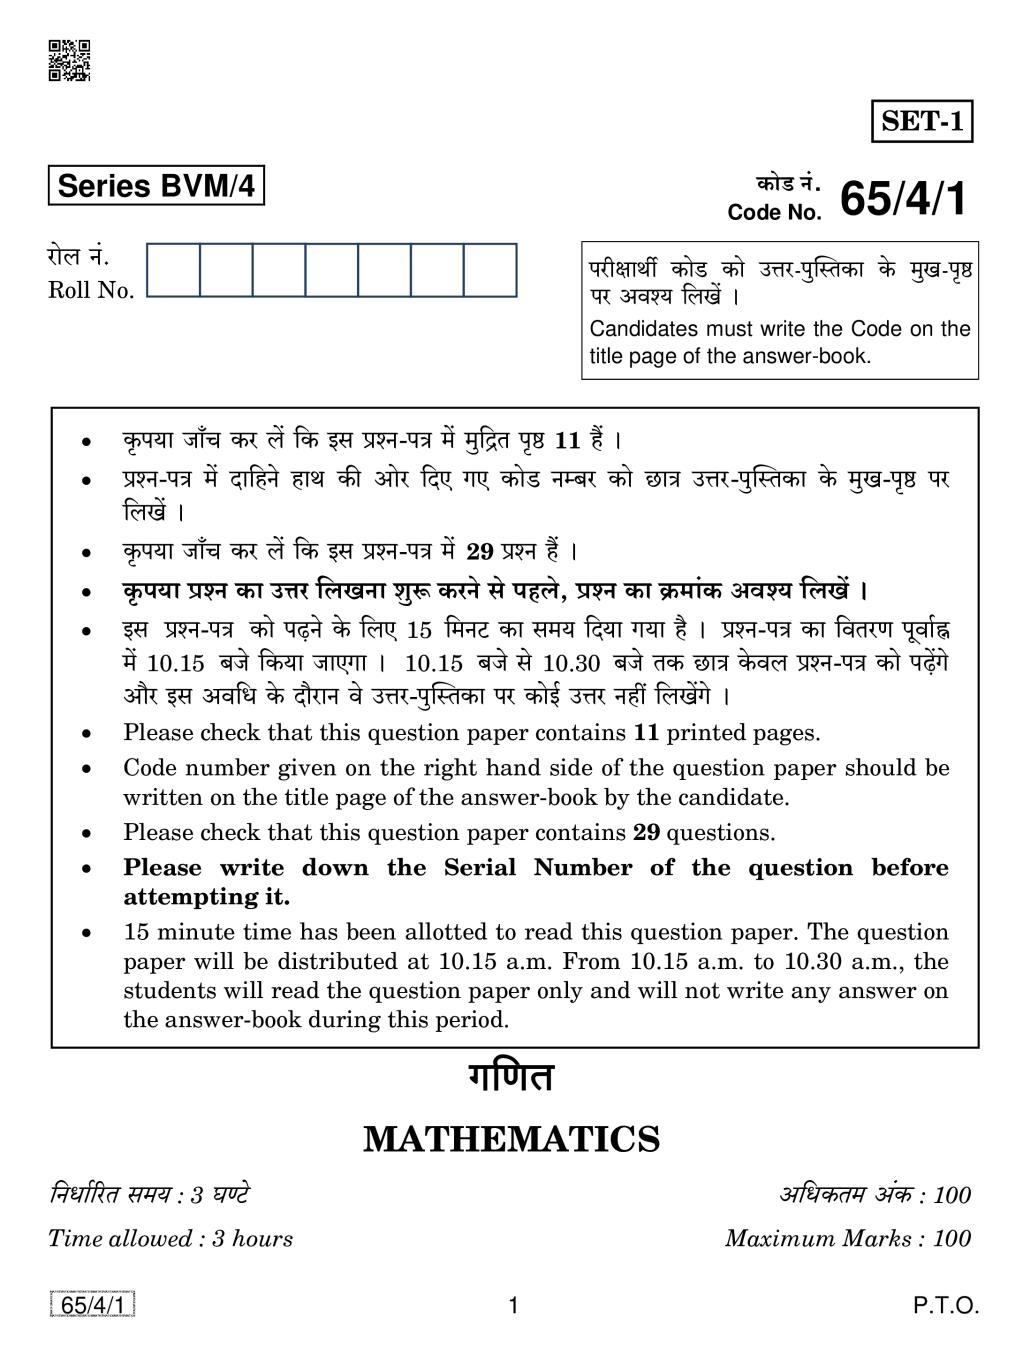 CBSE Class 12 Mathematics Question Paper 2019 Set 4 - Page 1